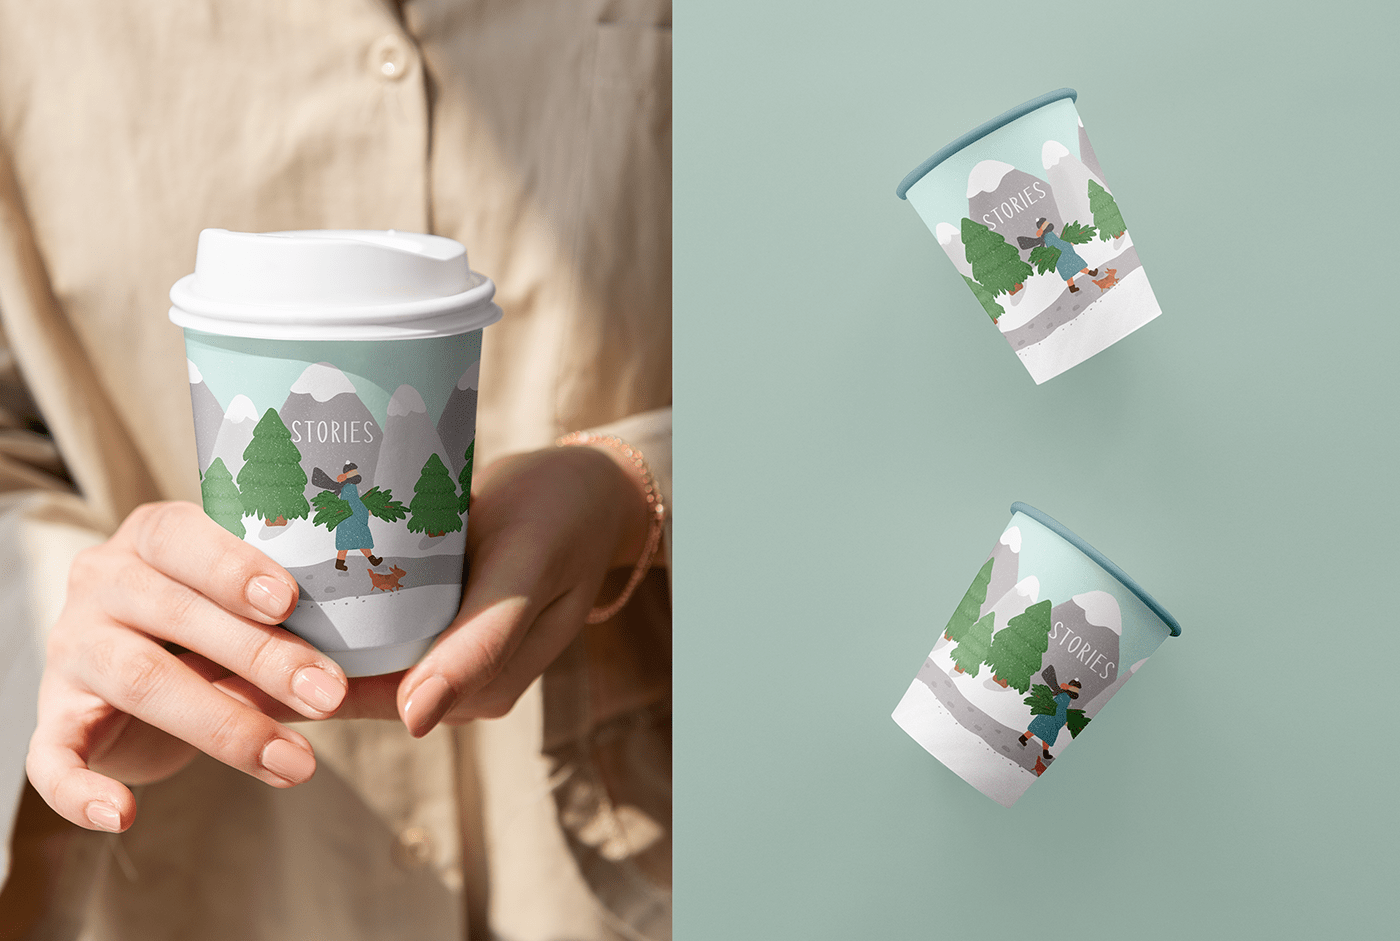 coffe cup illustrations Packaging digital illustration